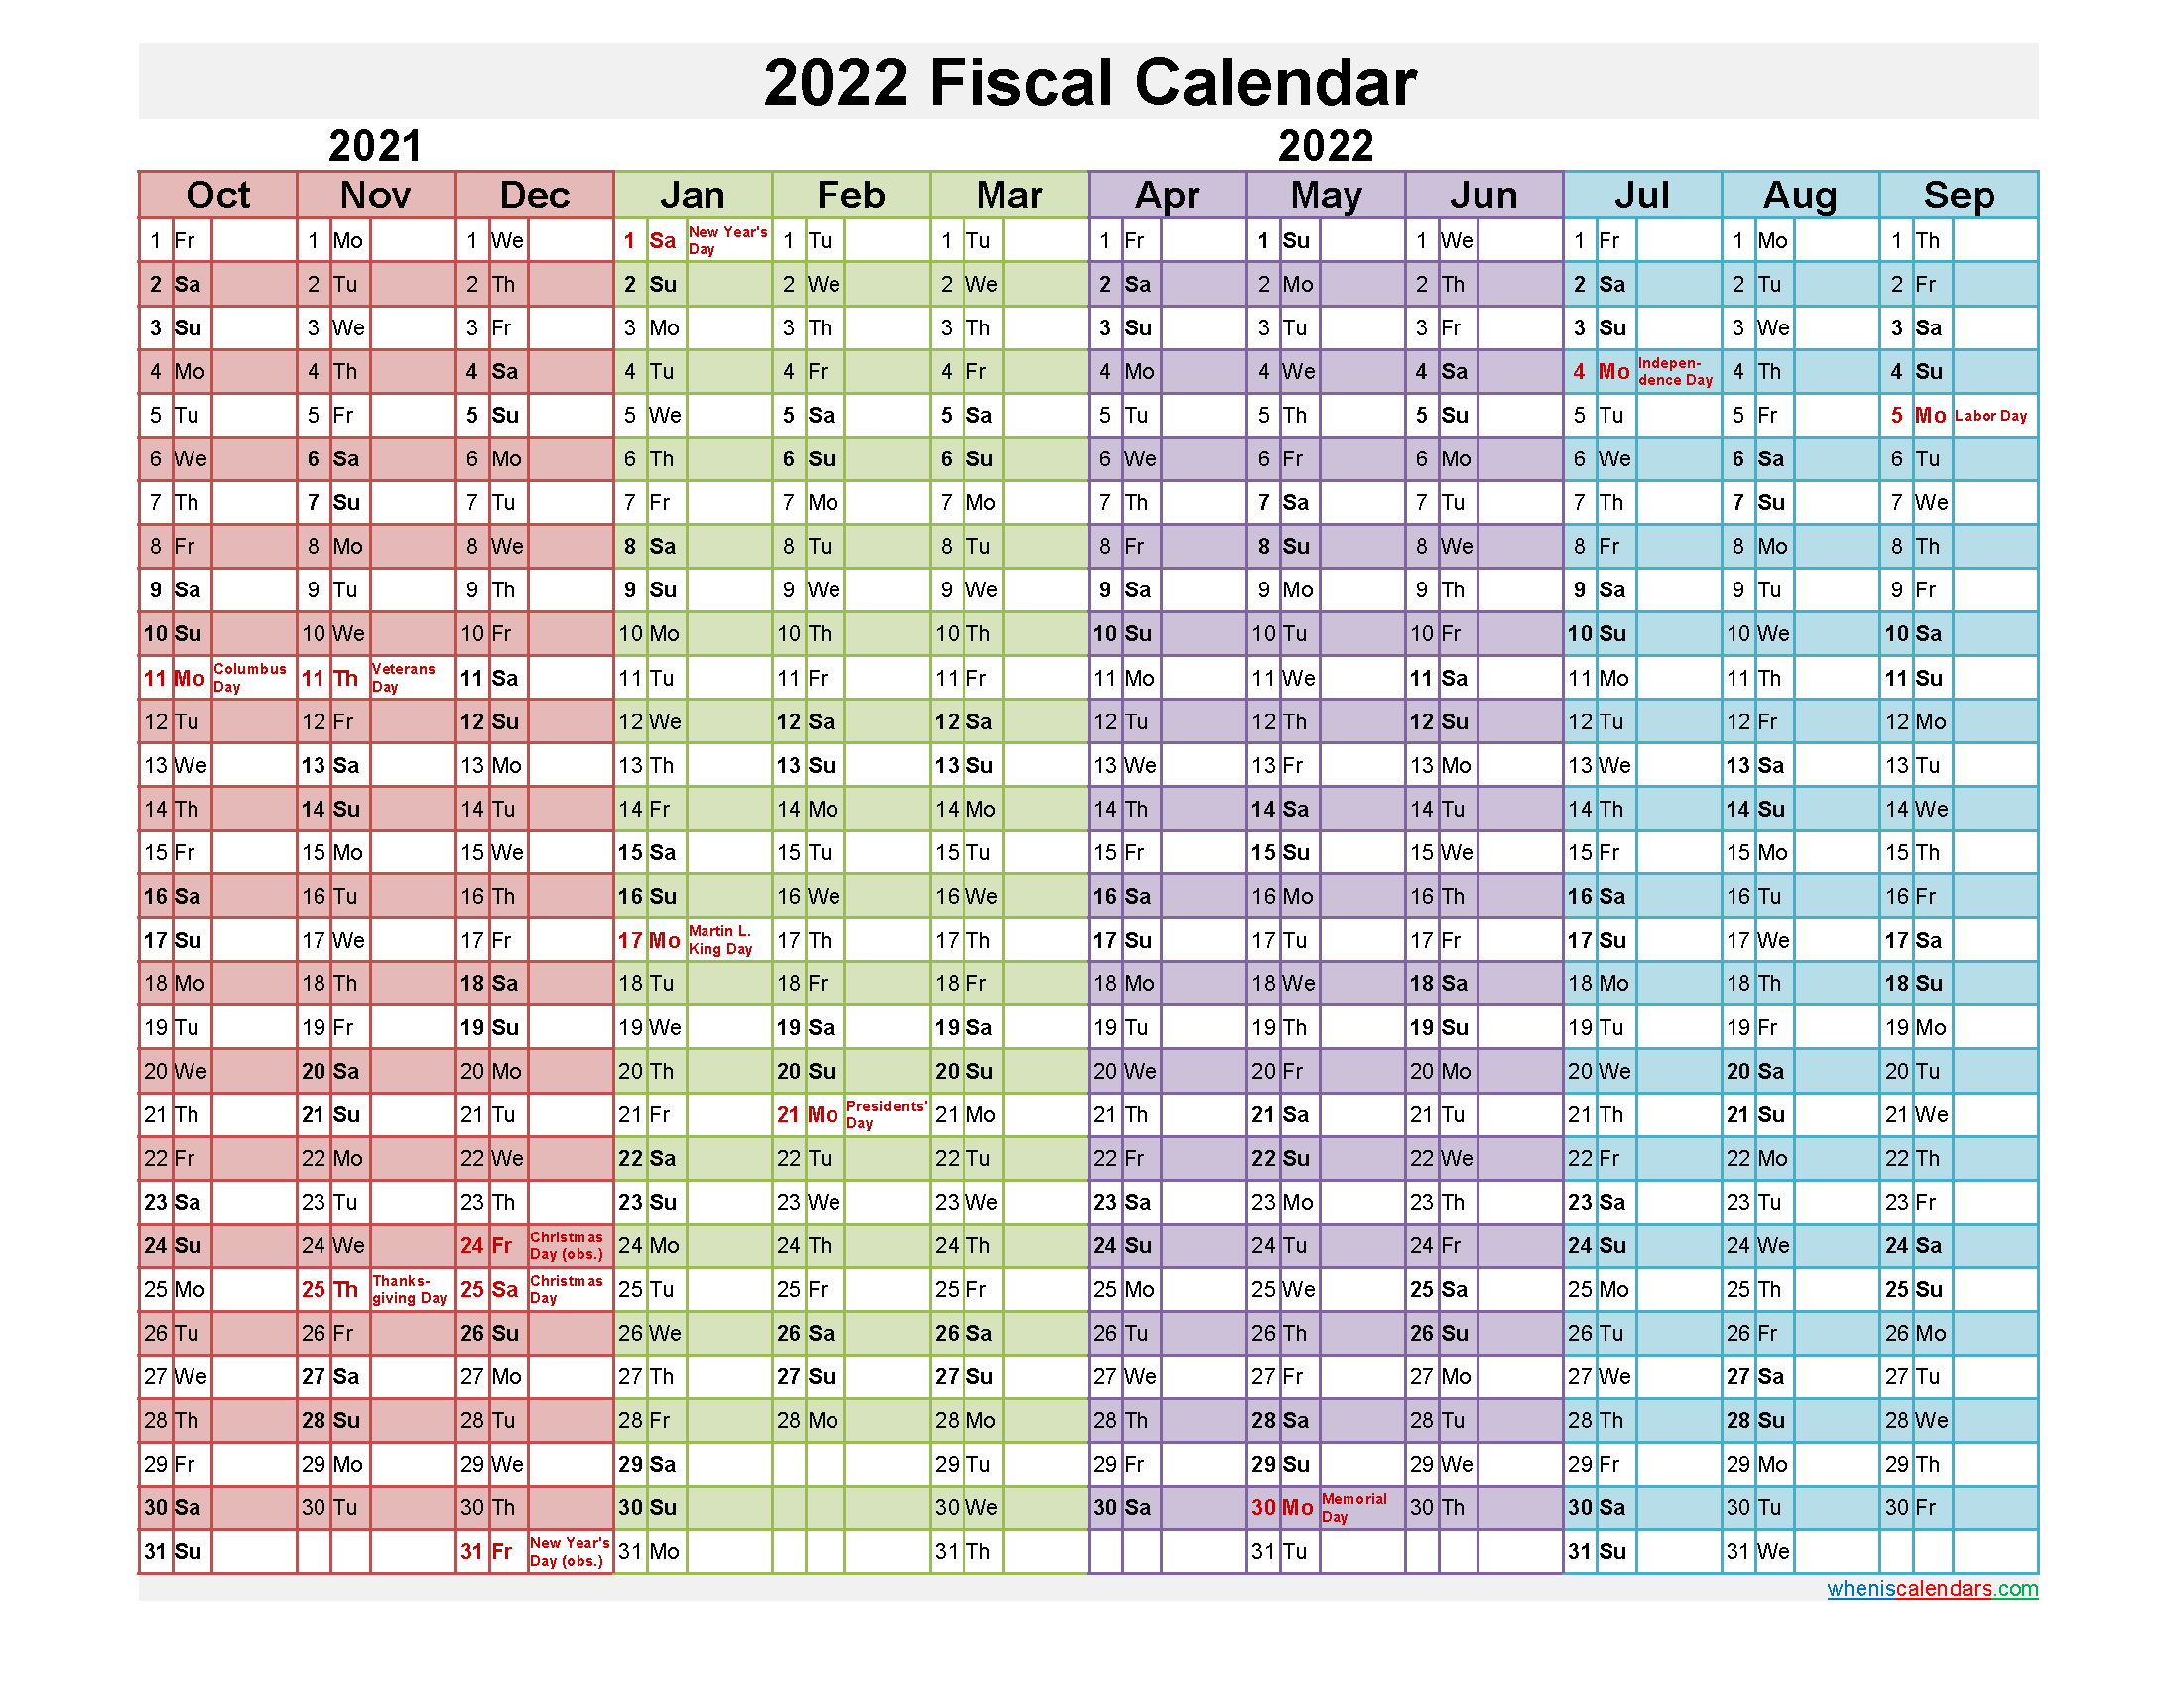 Fiscal Year 2022 Calendar Fiscal Year 2022 Calendar - Template No.fiscal22Y21